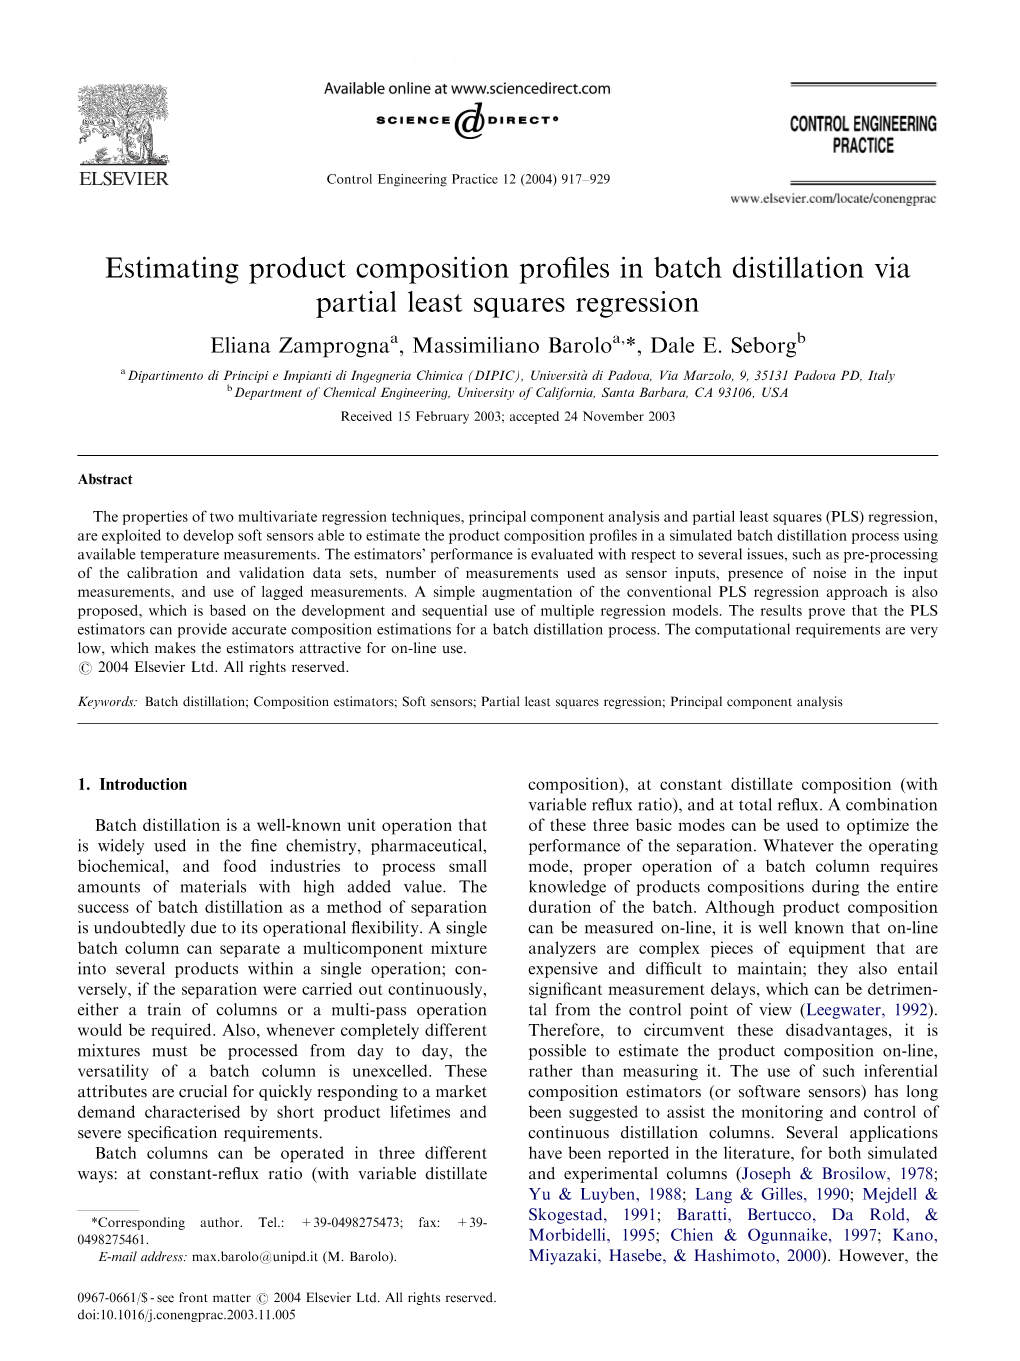 Estimating Product Composition Profiles in Batch Distillation Via